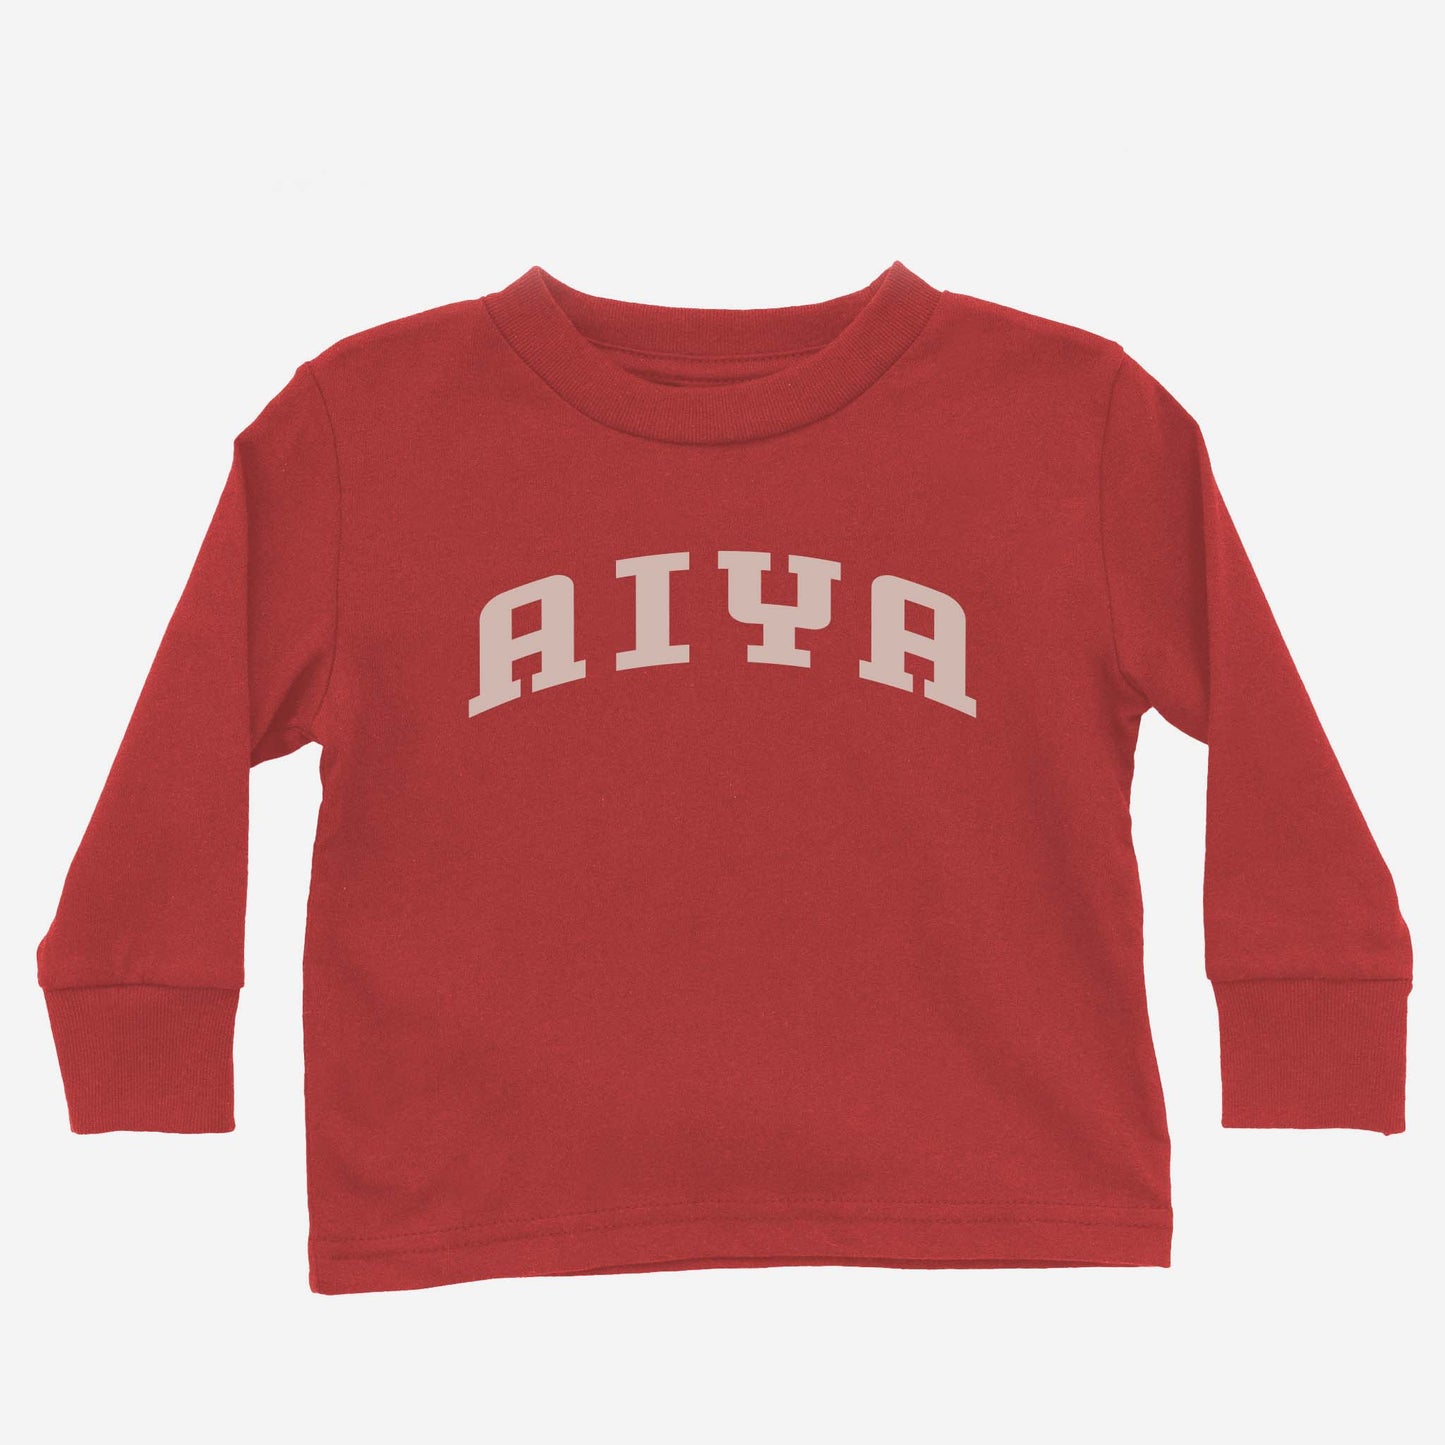 Aiya Toddler Long Sleeve Shirt red - Asian Baby Clothing